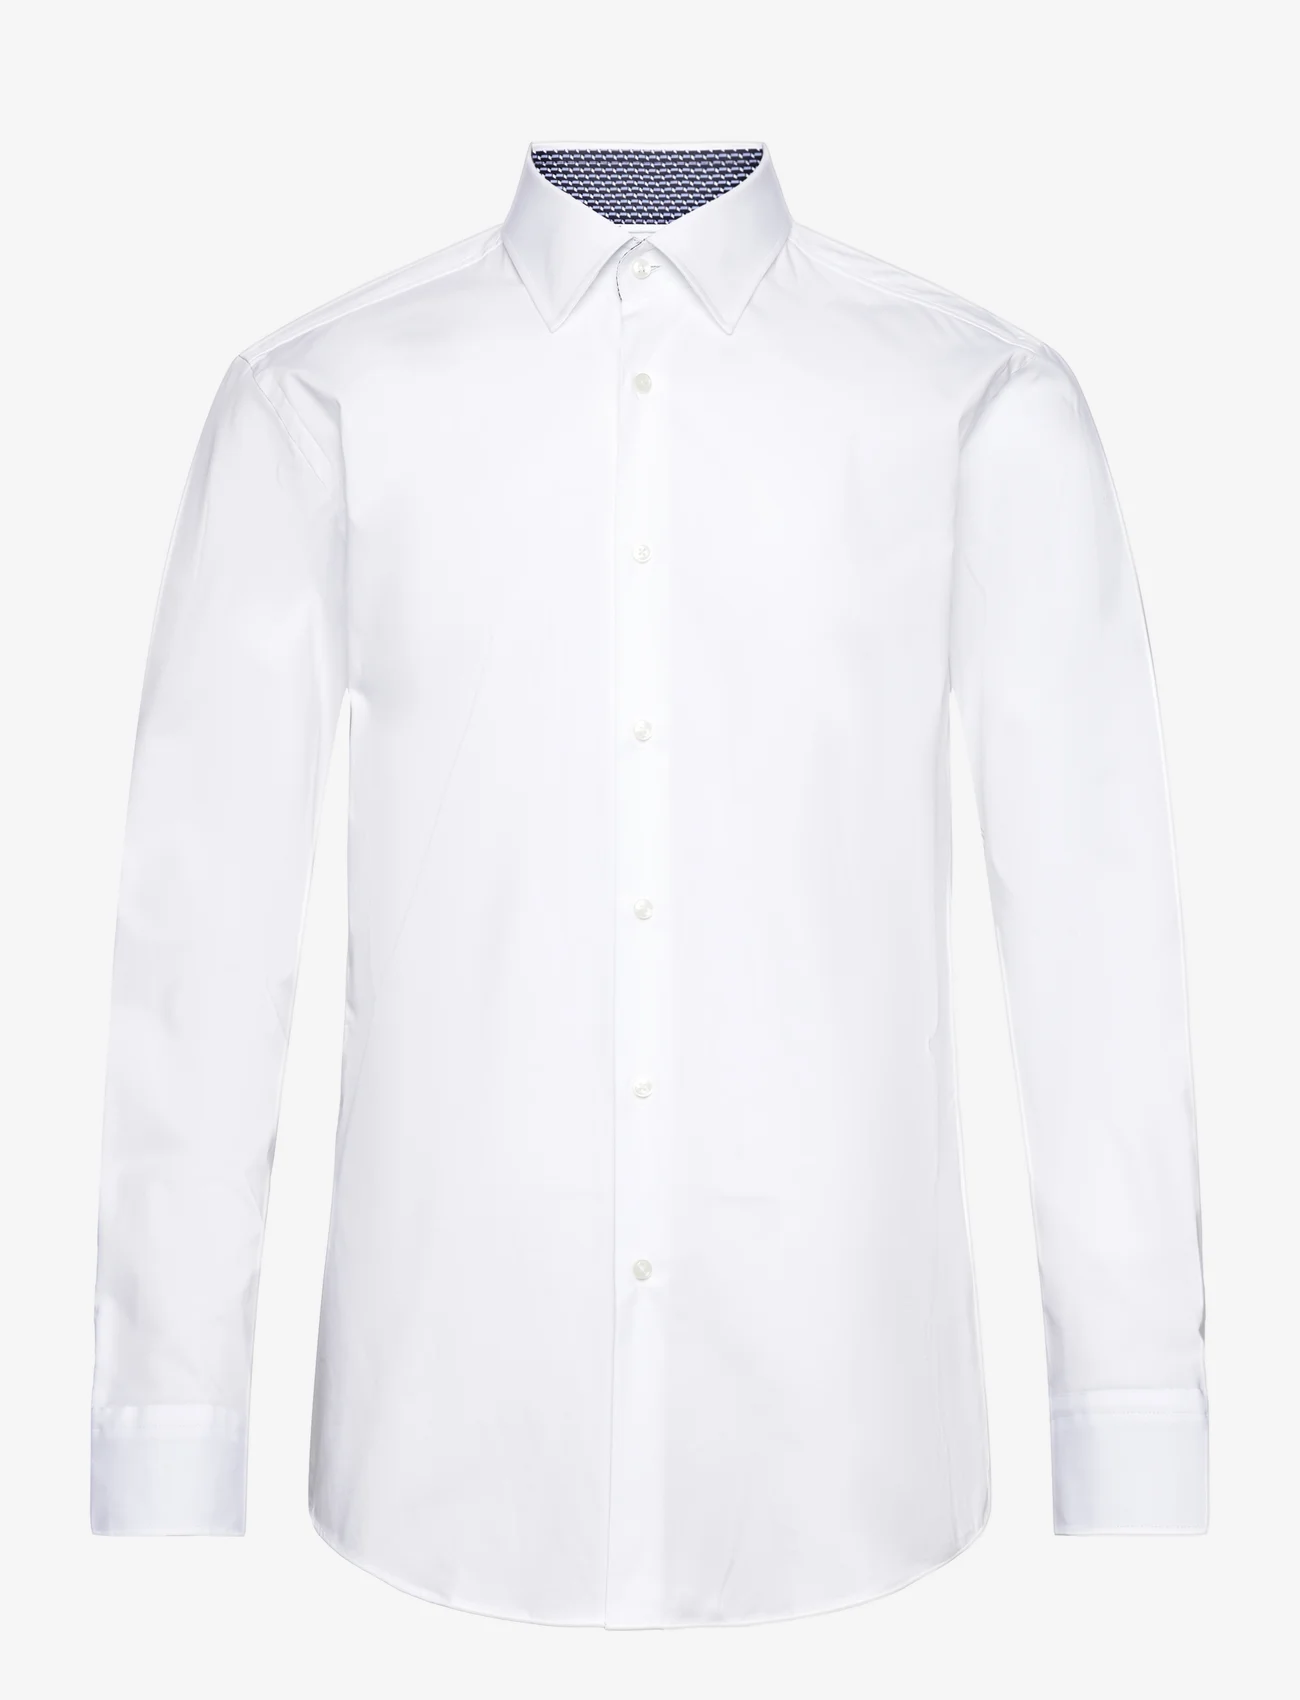 BOSS - H-HANK-kent-C3-214 - basic shirts - white - 0